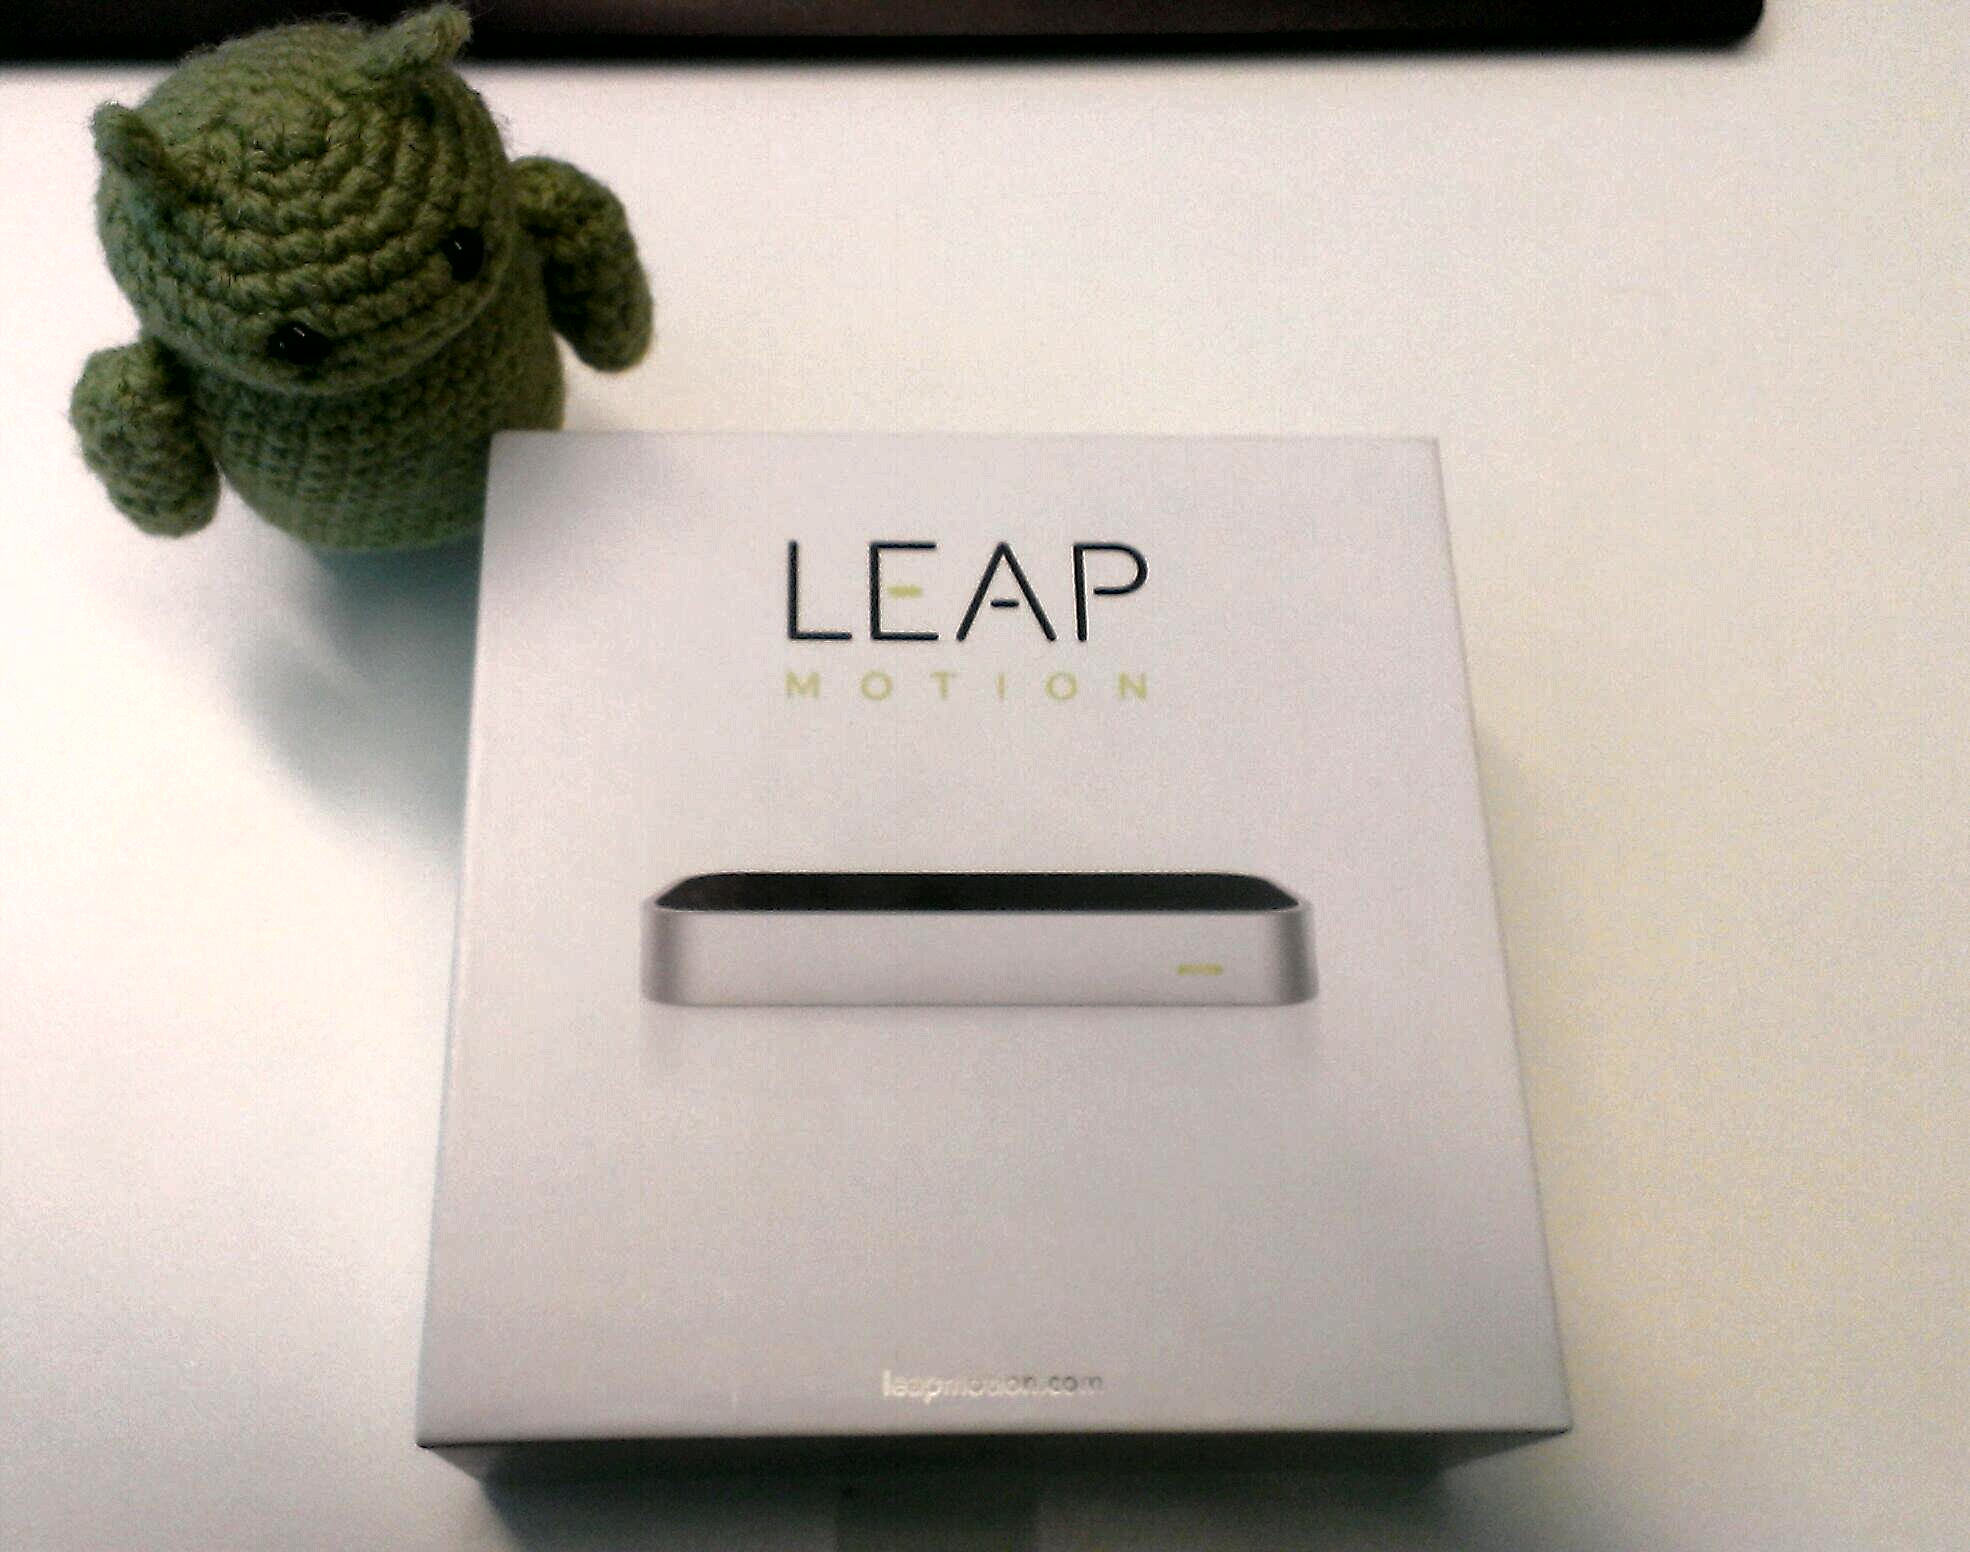 The Leap Motion box